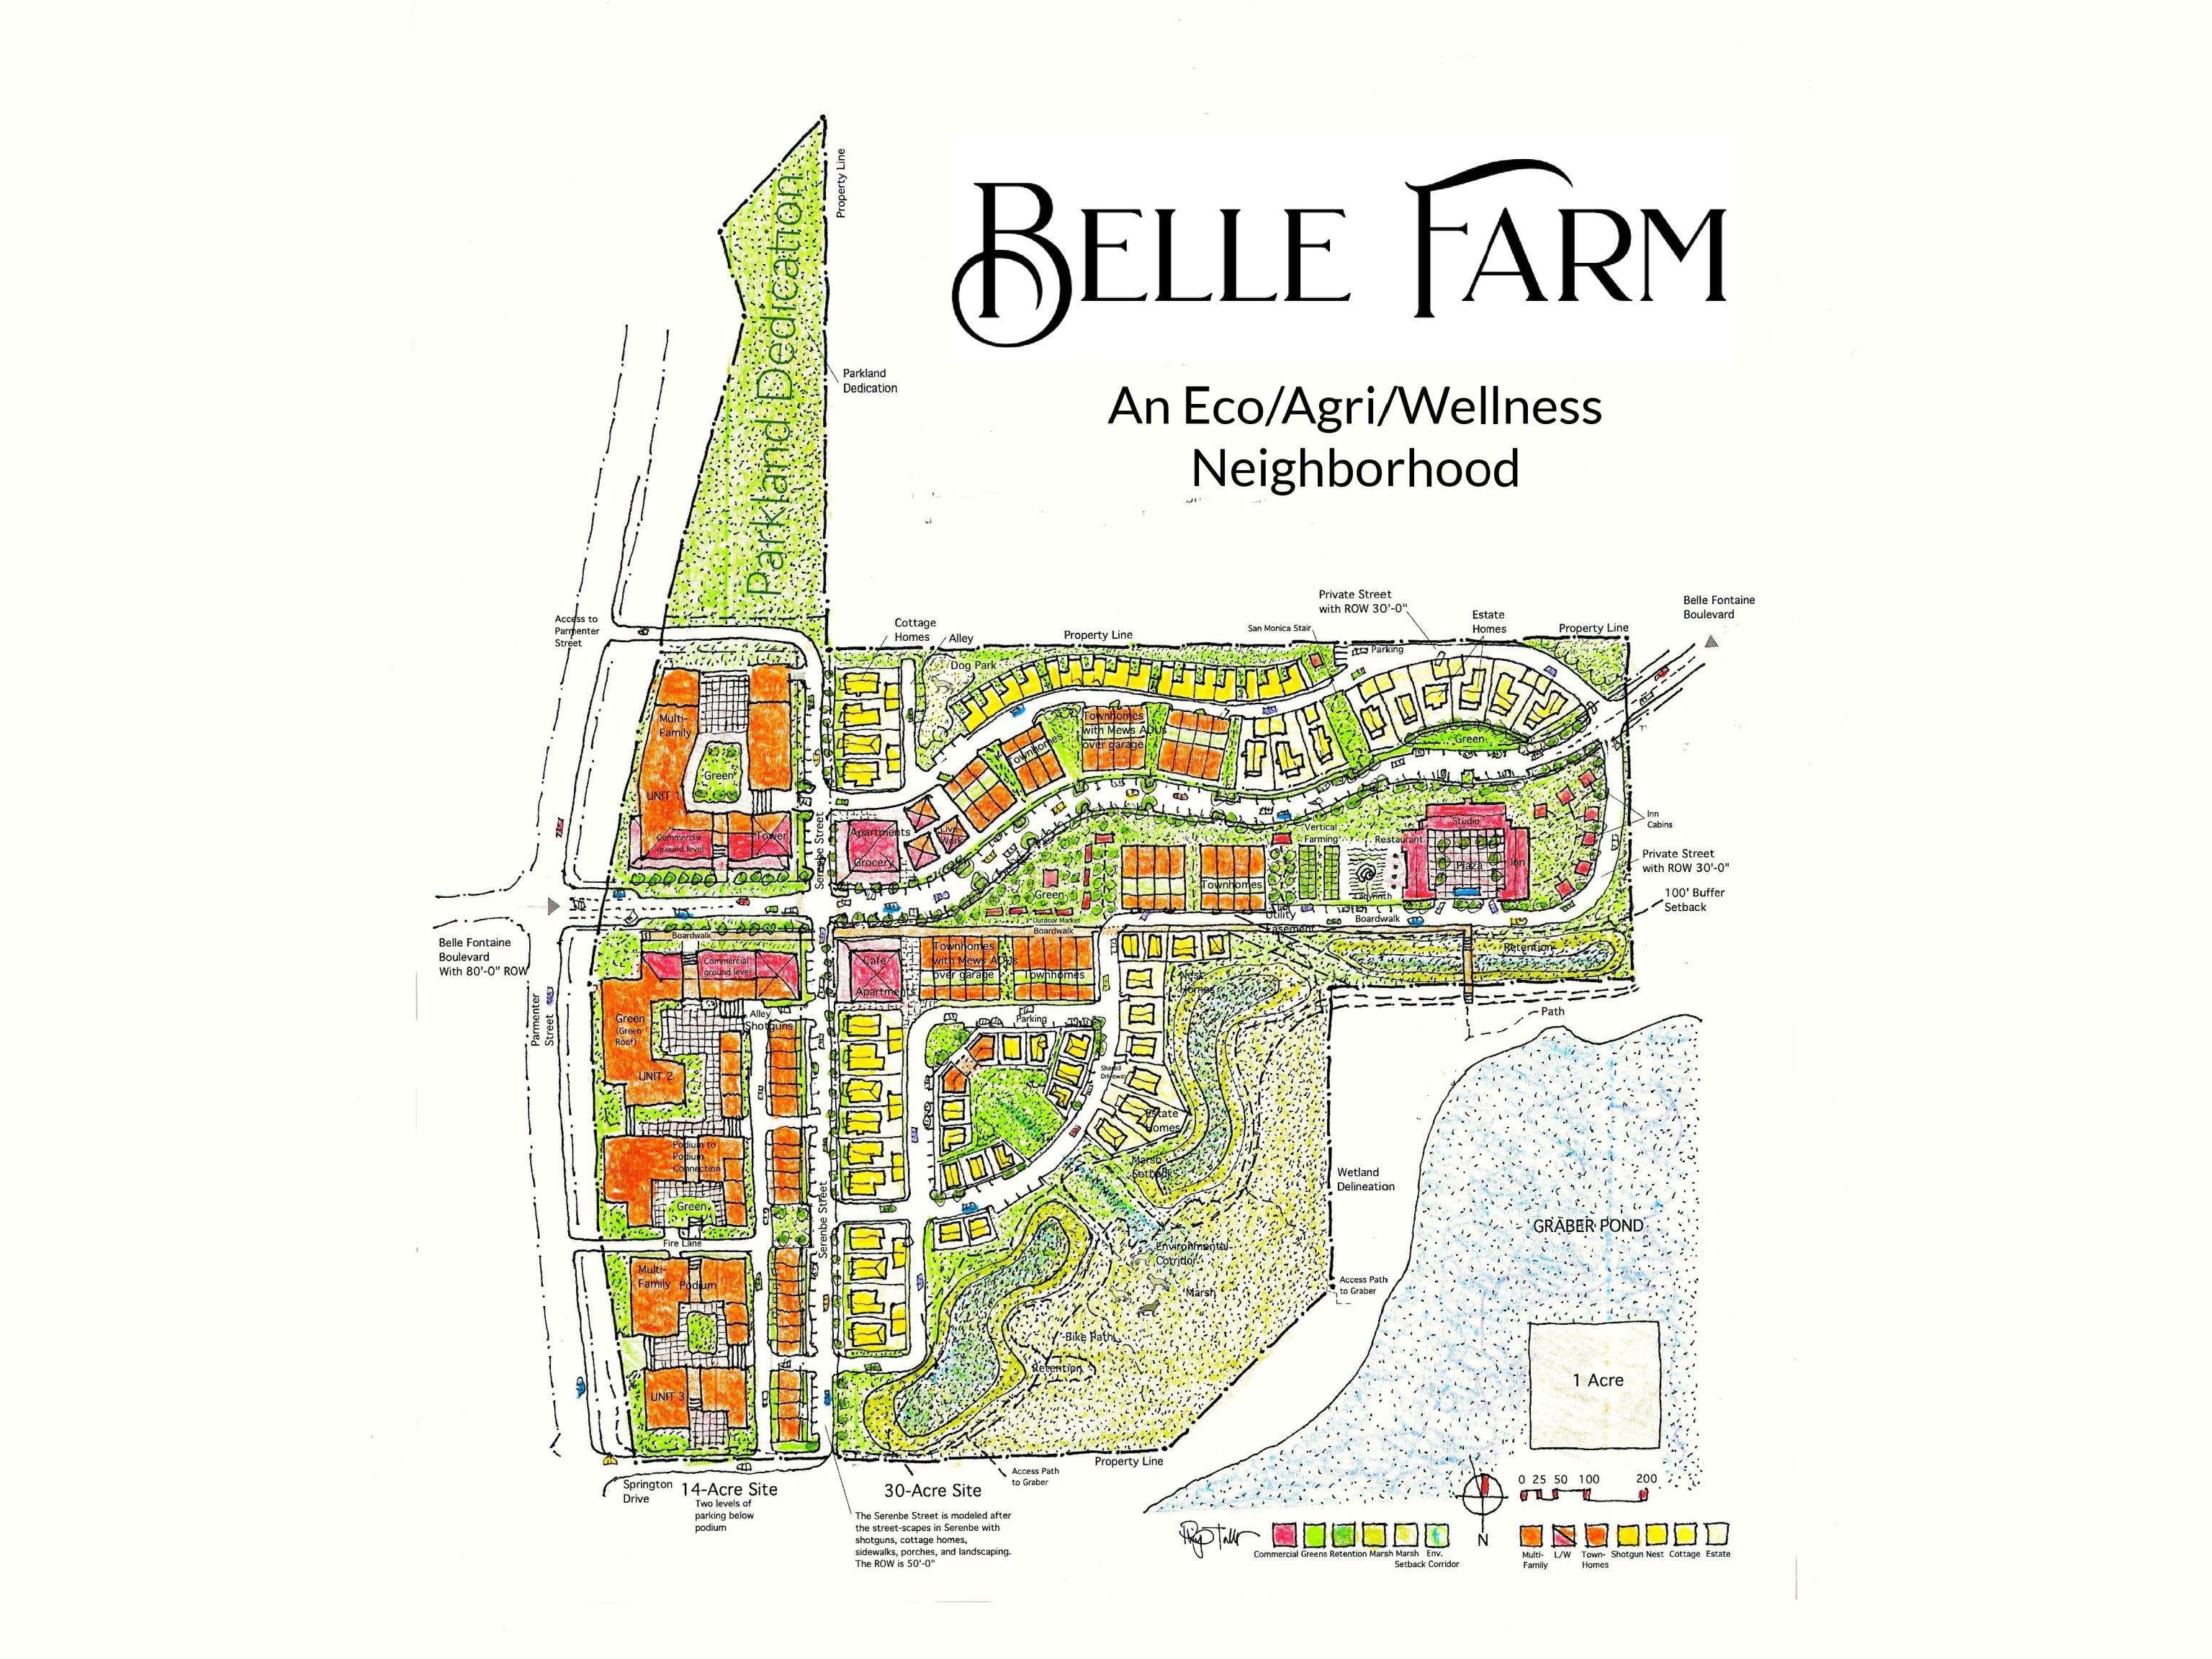 2. Lot 42 Belle Farm